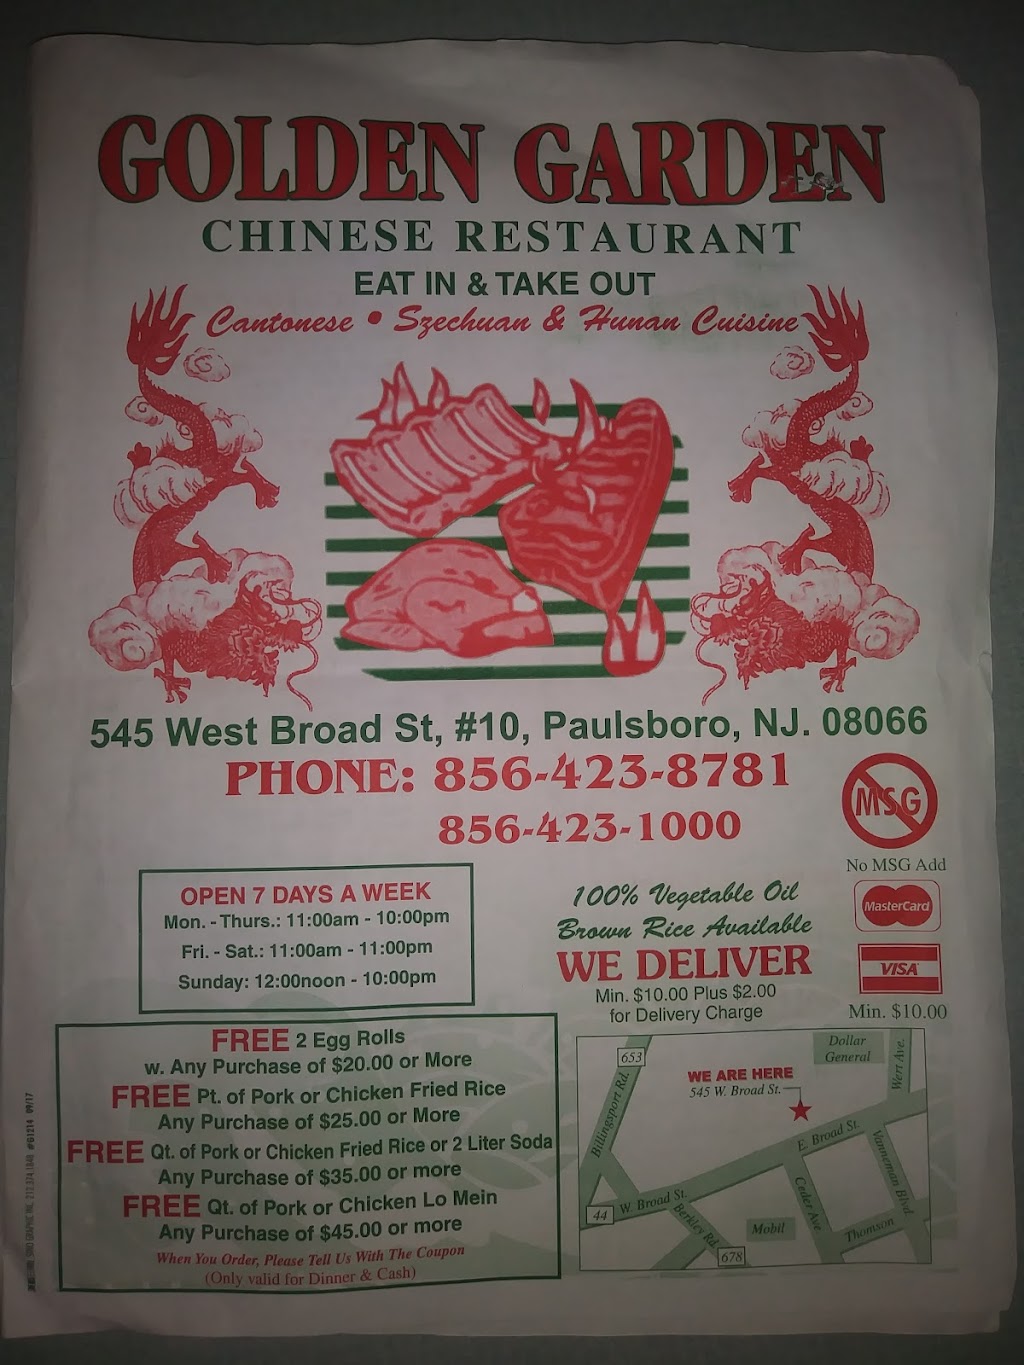 Golden Garden Restaurant | 545 W Broad St #10, Paulsboro, NJ 08066 | Phone: (856) 423-8781